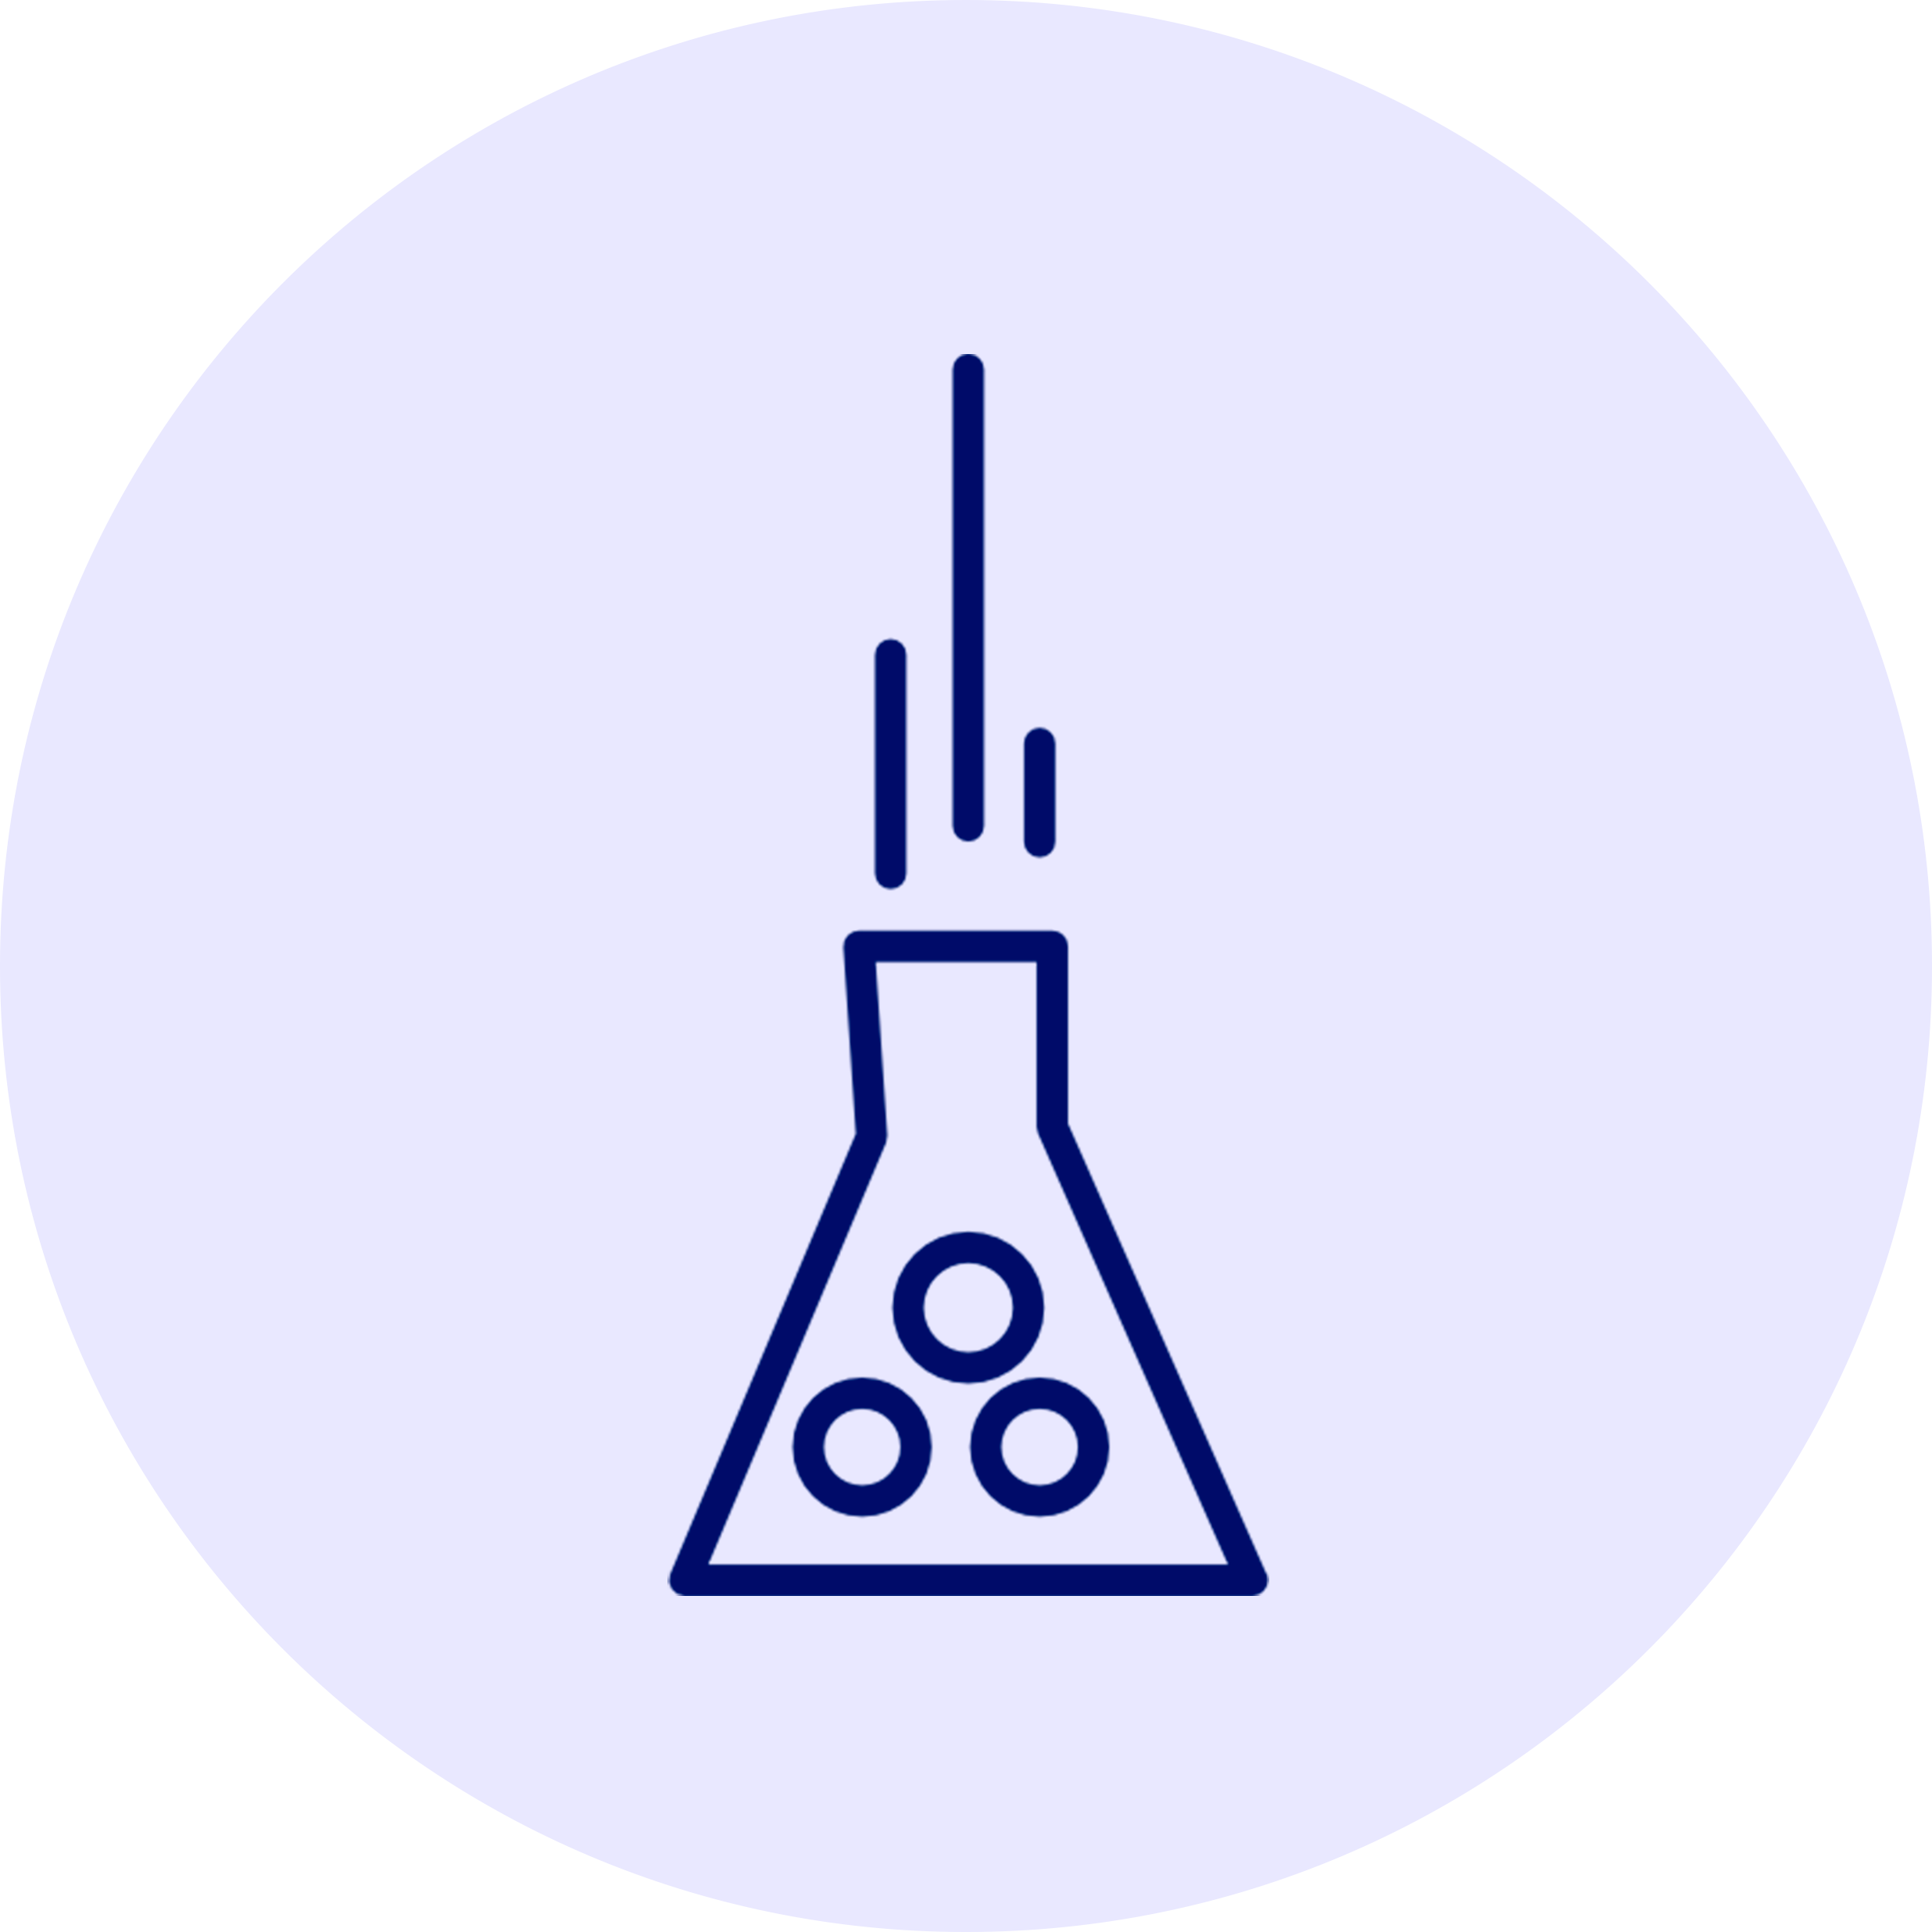 Chemistry experiment icon